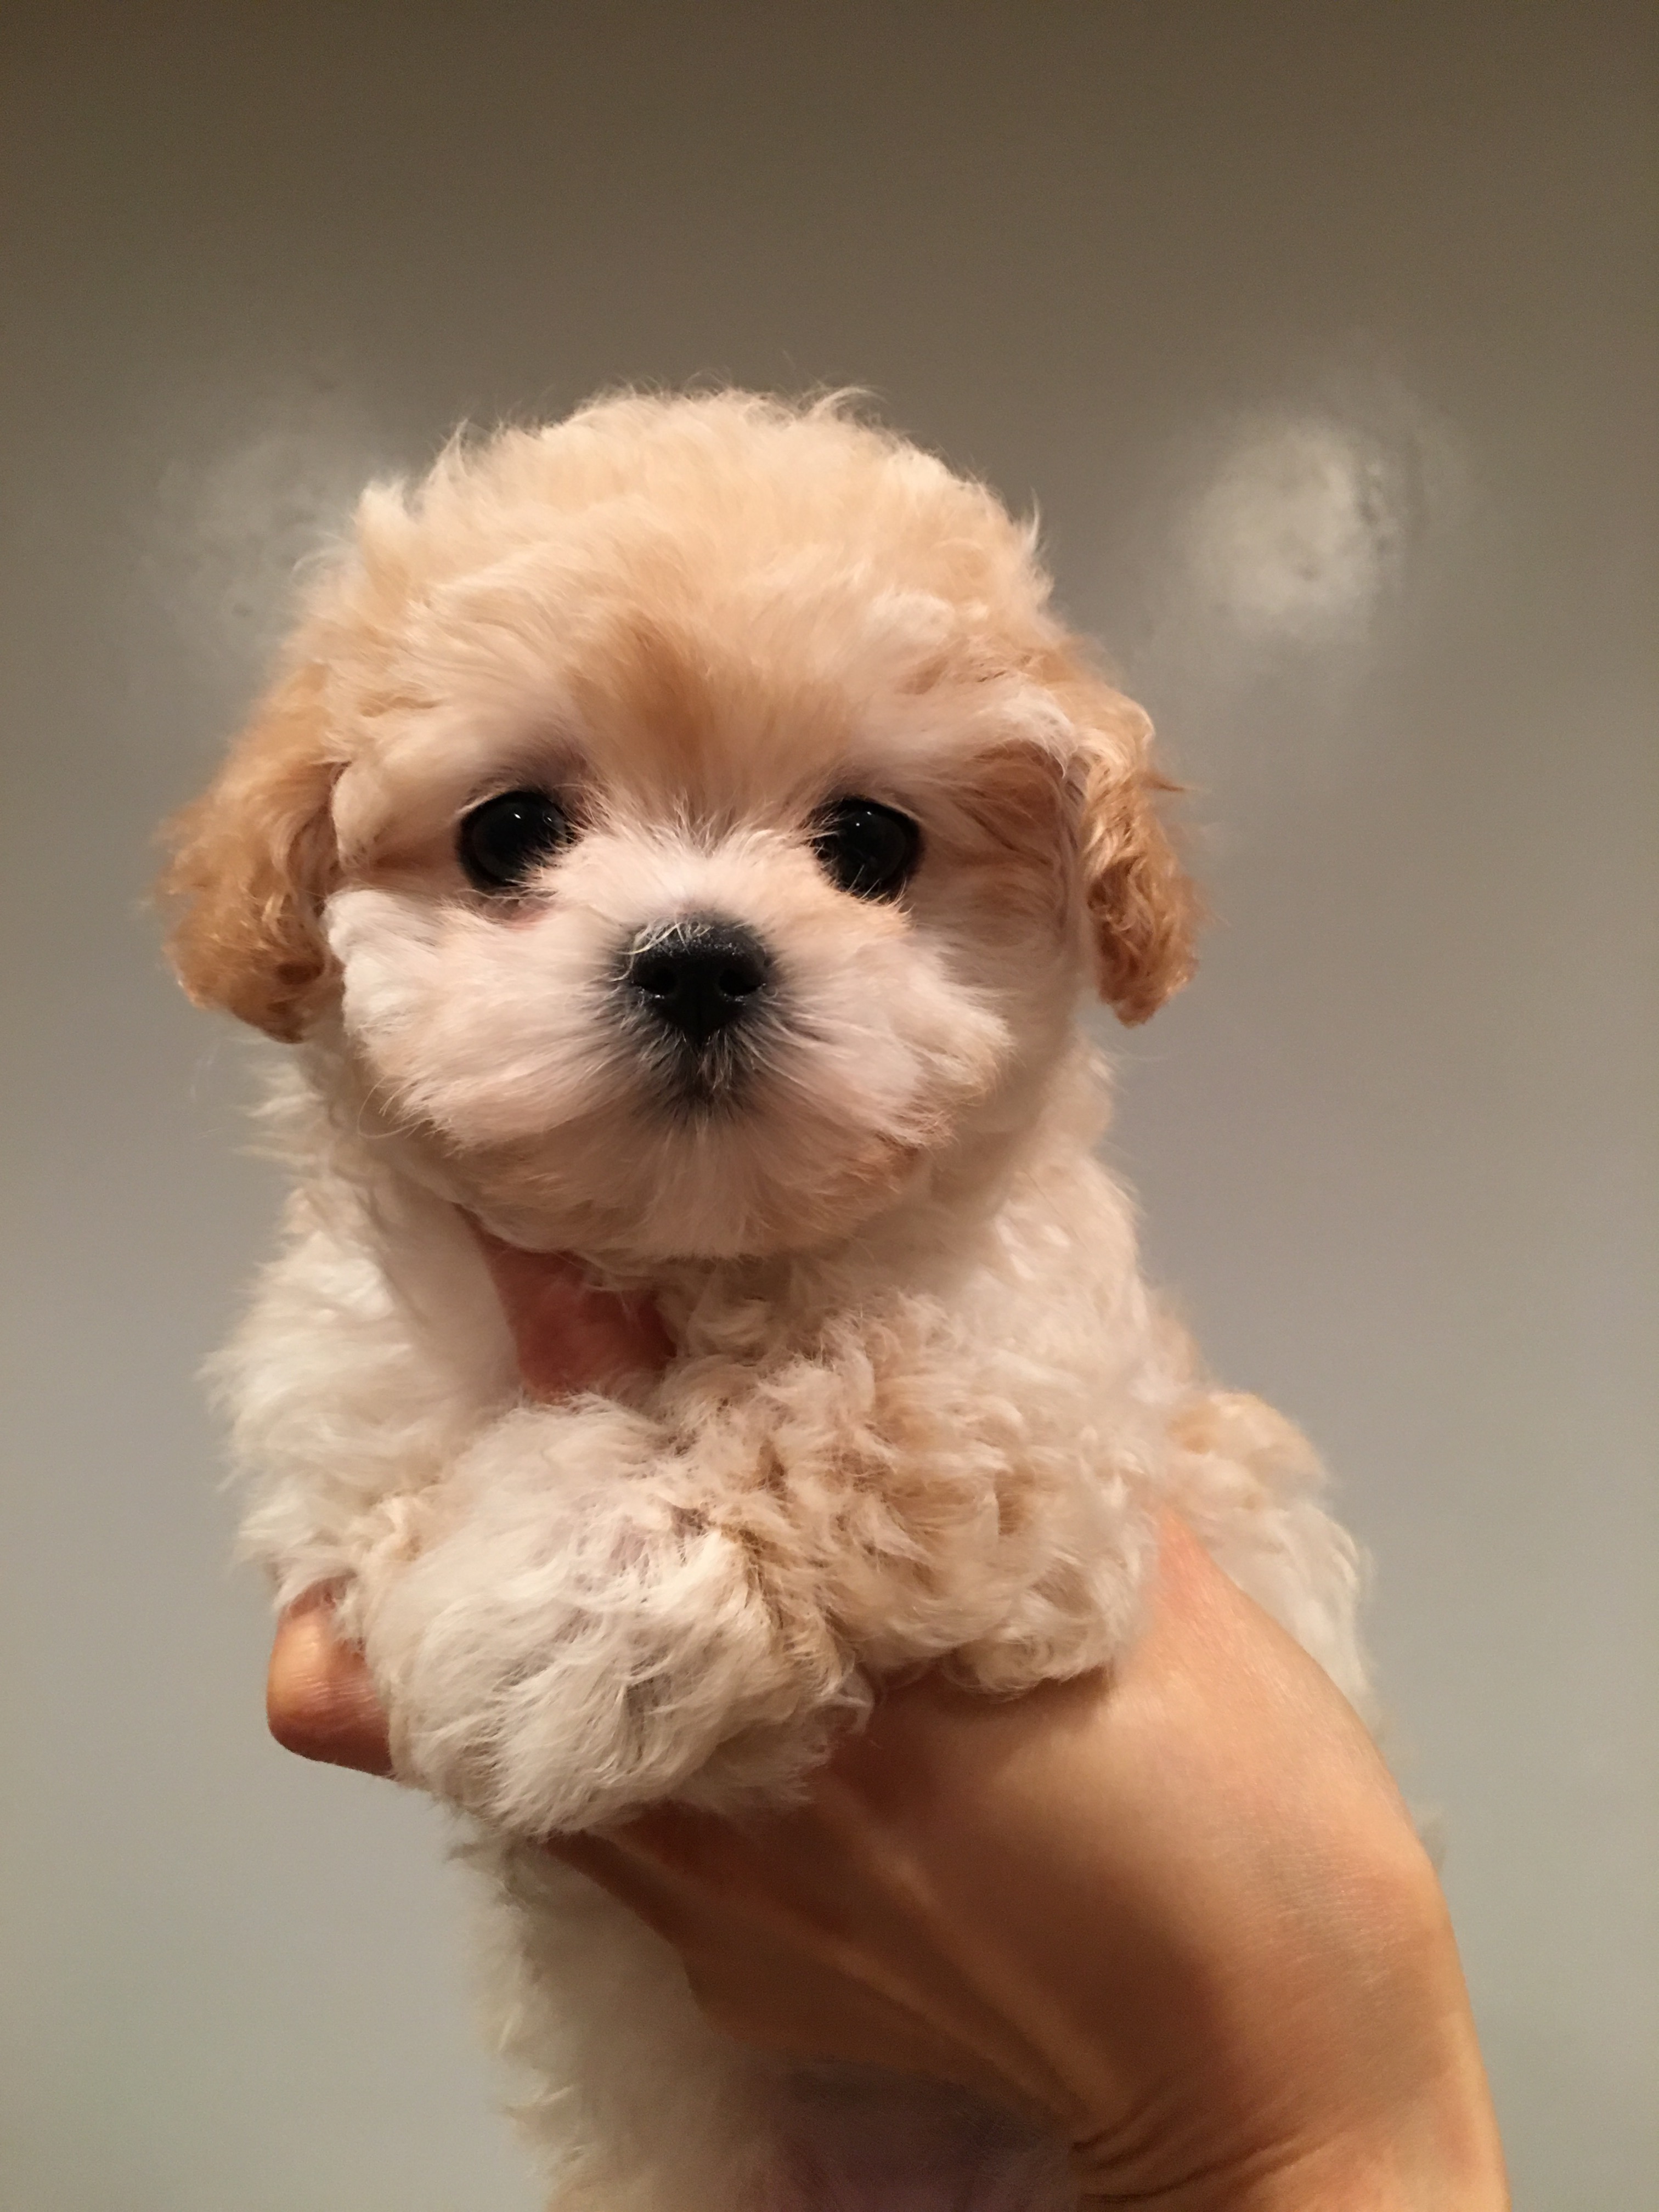 Teacup maltipoo puppy for sale! California Princess iHeartTeacups